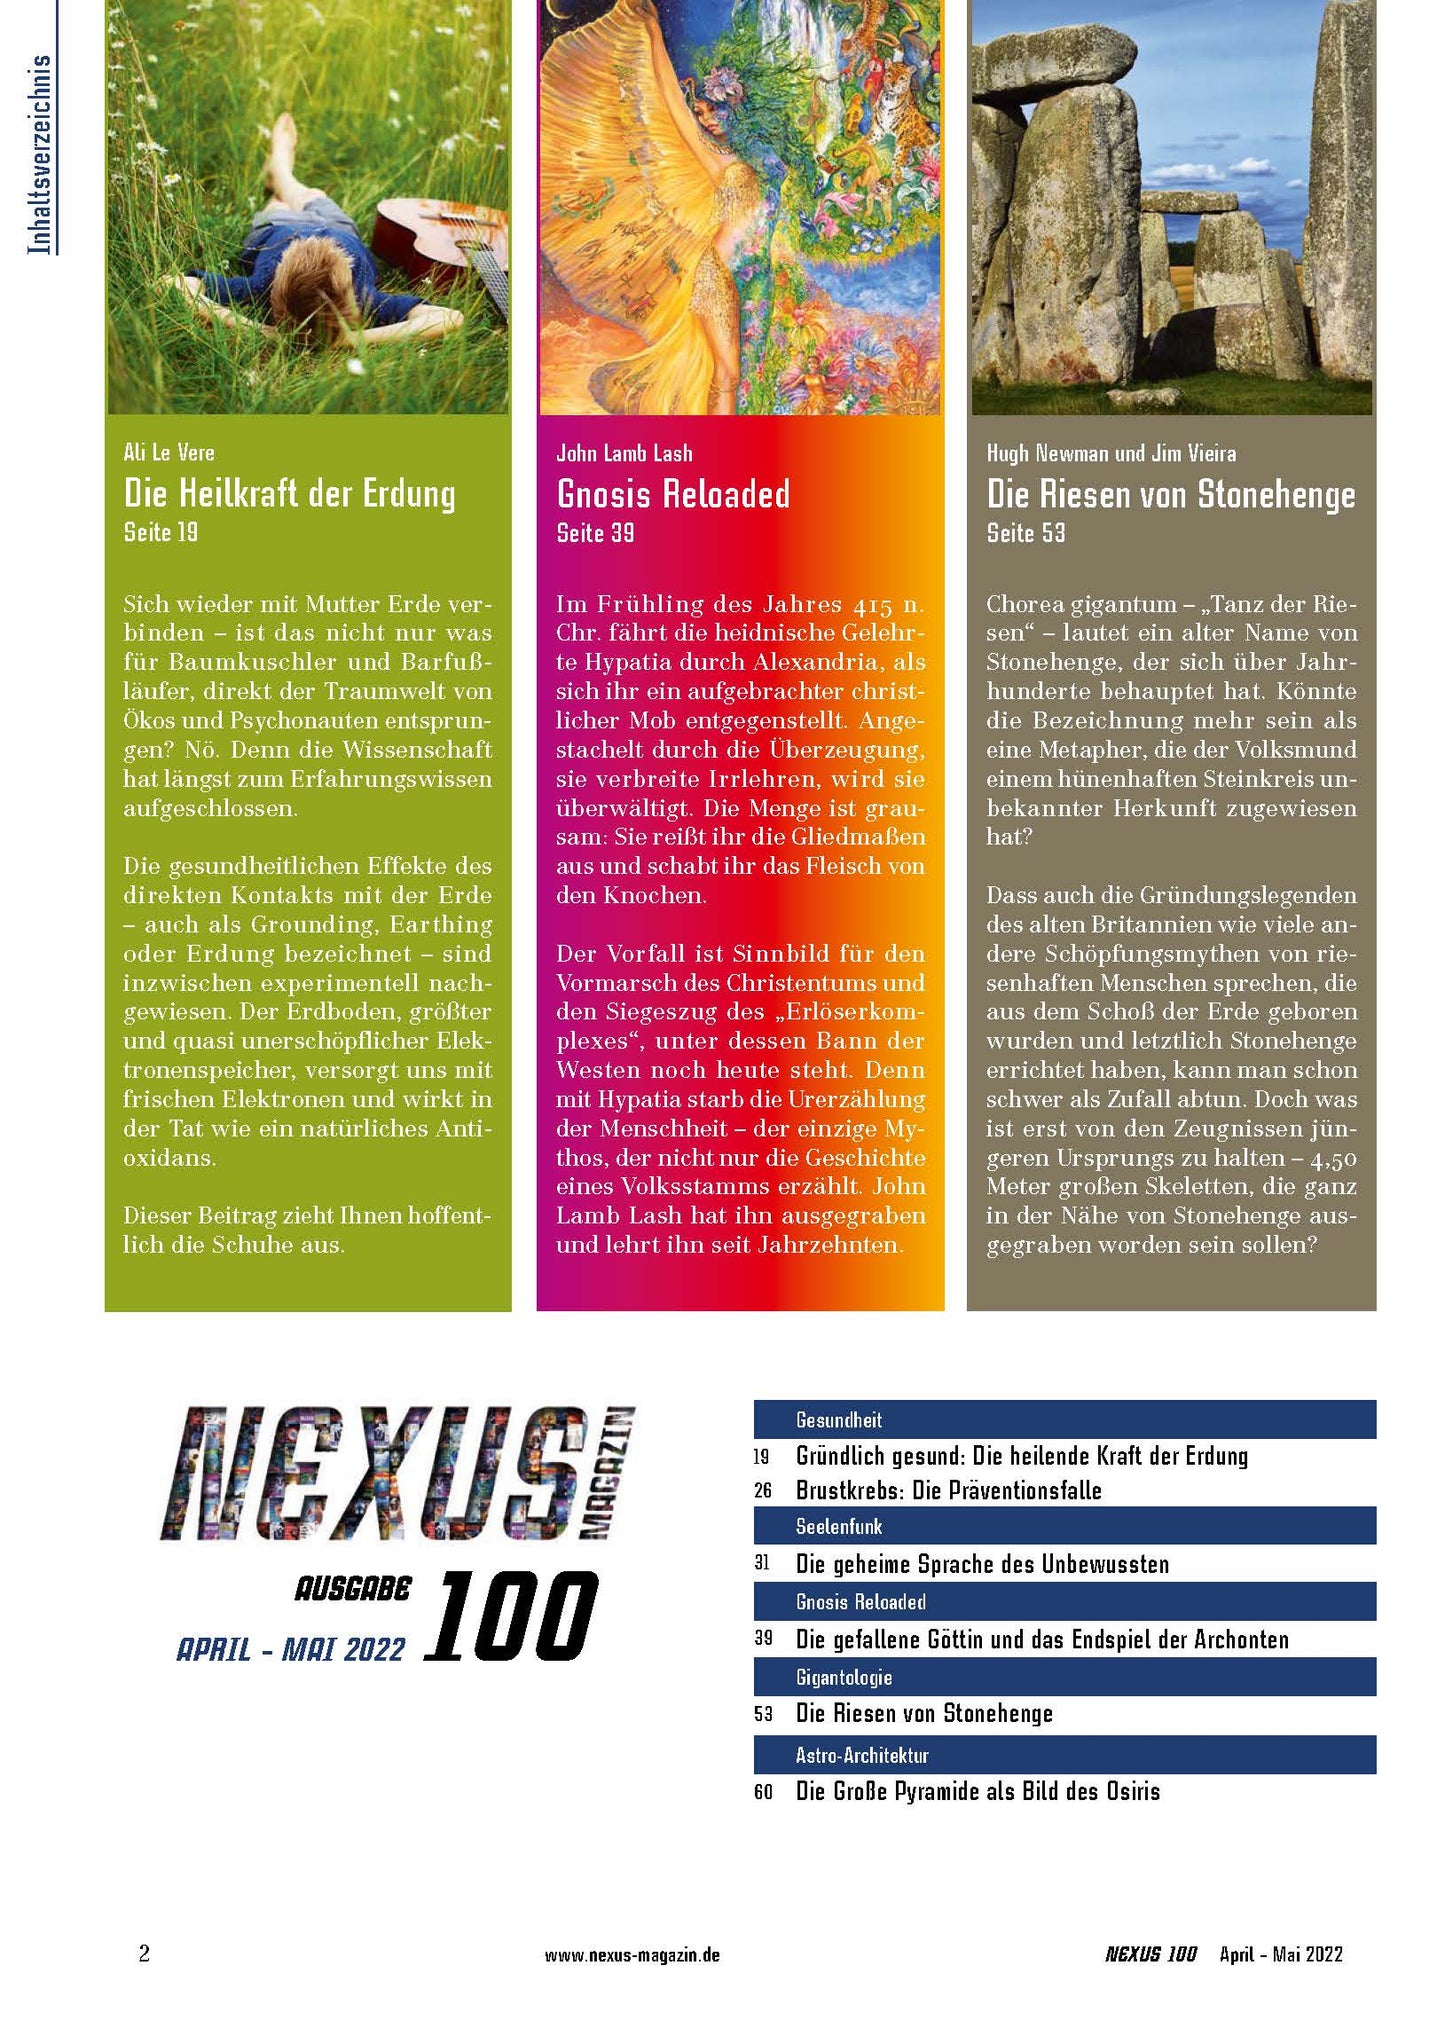 NEXUS-Magazin 100: Leseprobe (Print)